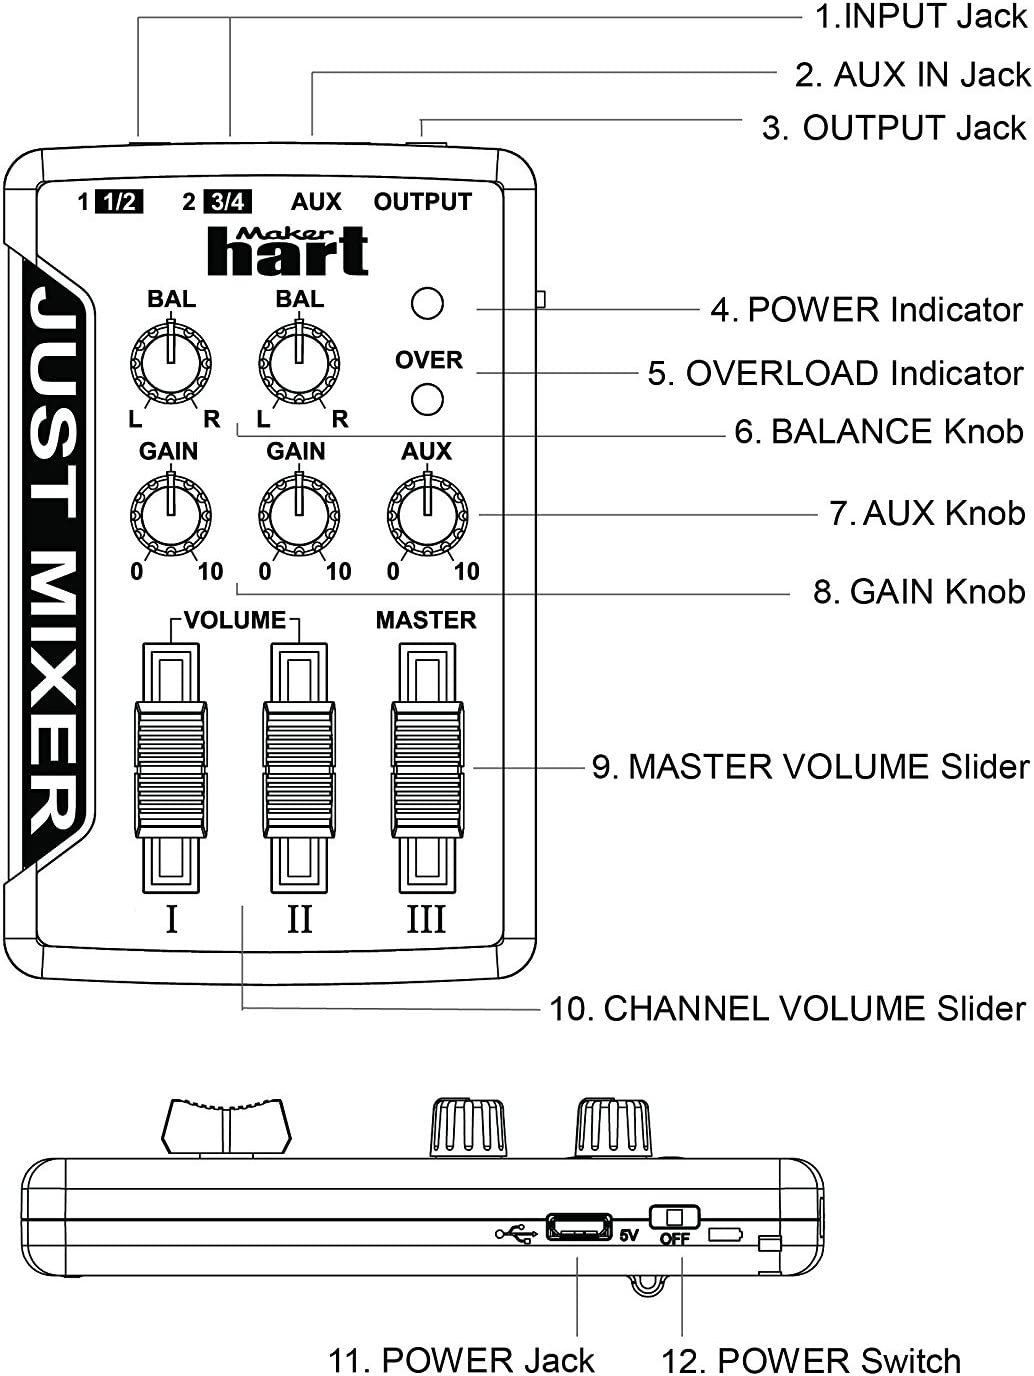 JUST MIXER Audio Mixer - Battery/USB Powered Portable Pocket Audio Mixer  Orange